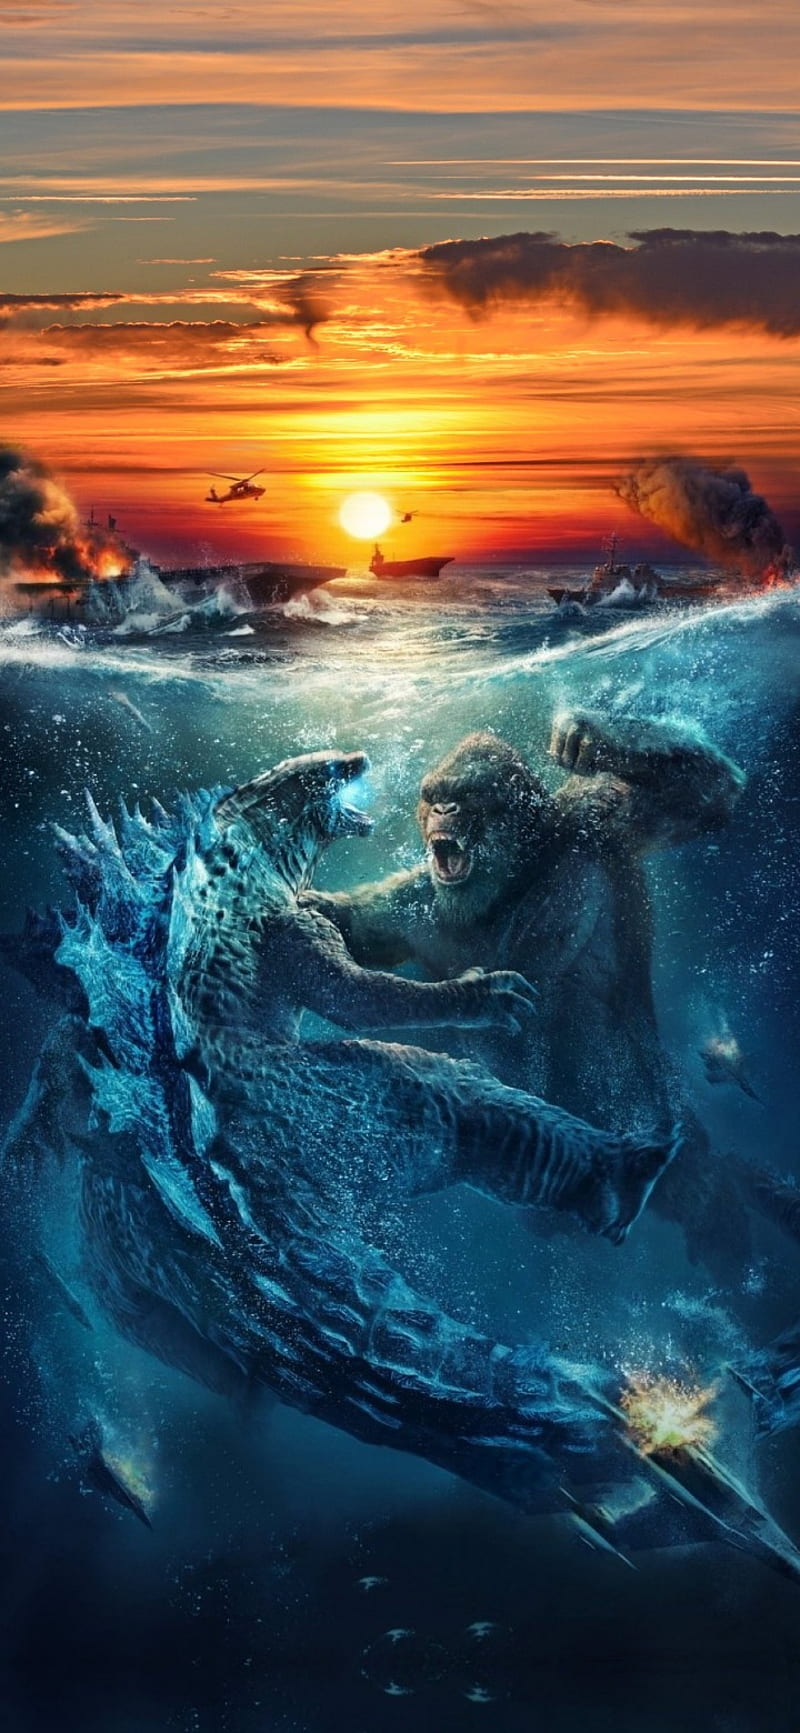 3D iPhone Wallpaper on Twitter Godzilla King of the Monsters iPhone  Wallpaper httpstcoA4SYjLL9fd httpstcoTWmAURJBEC  Twitter